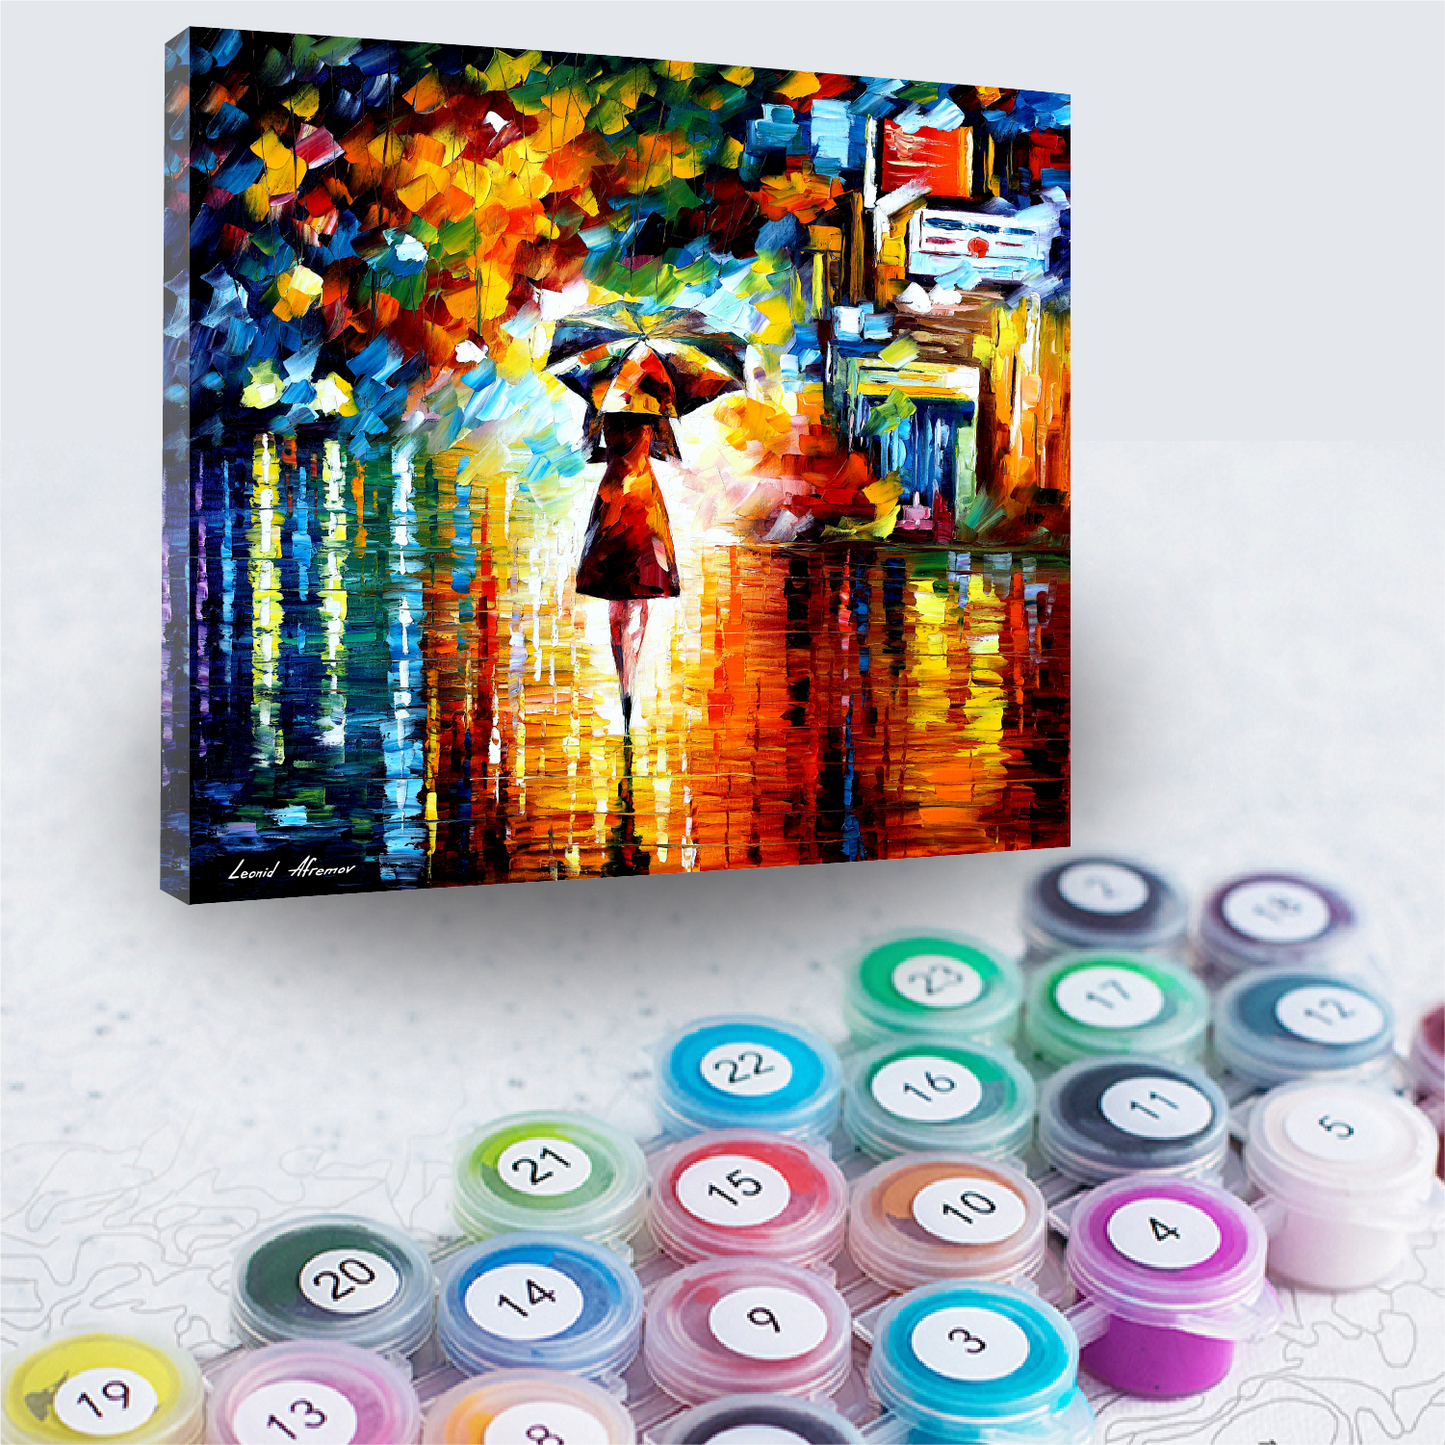 Rain Princess - Afremov -  Paint By Numbers Kit